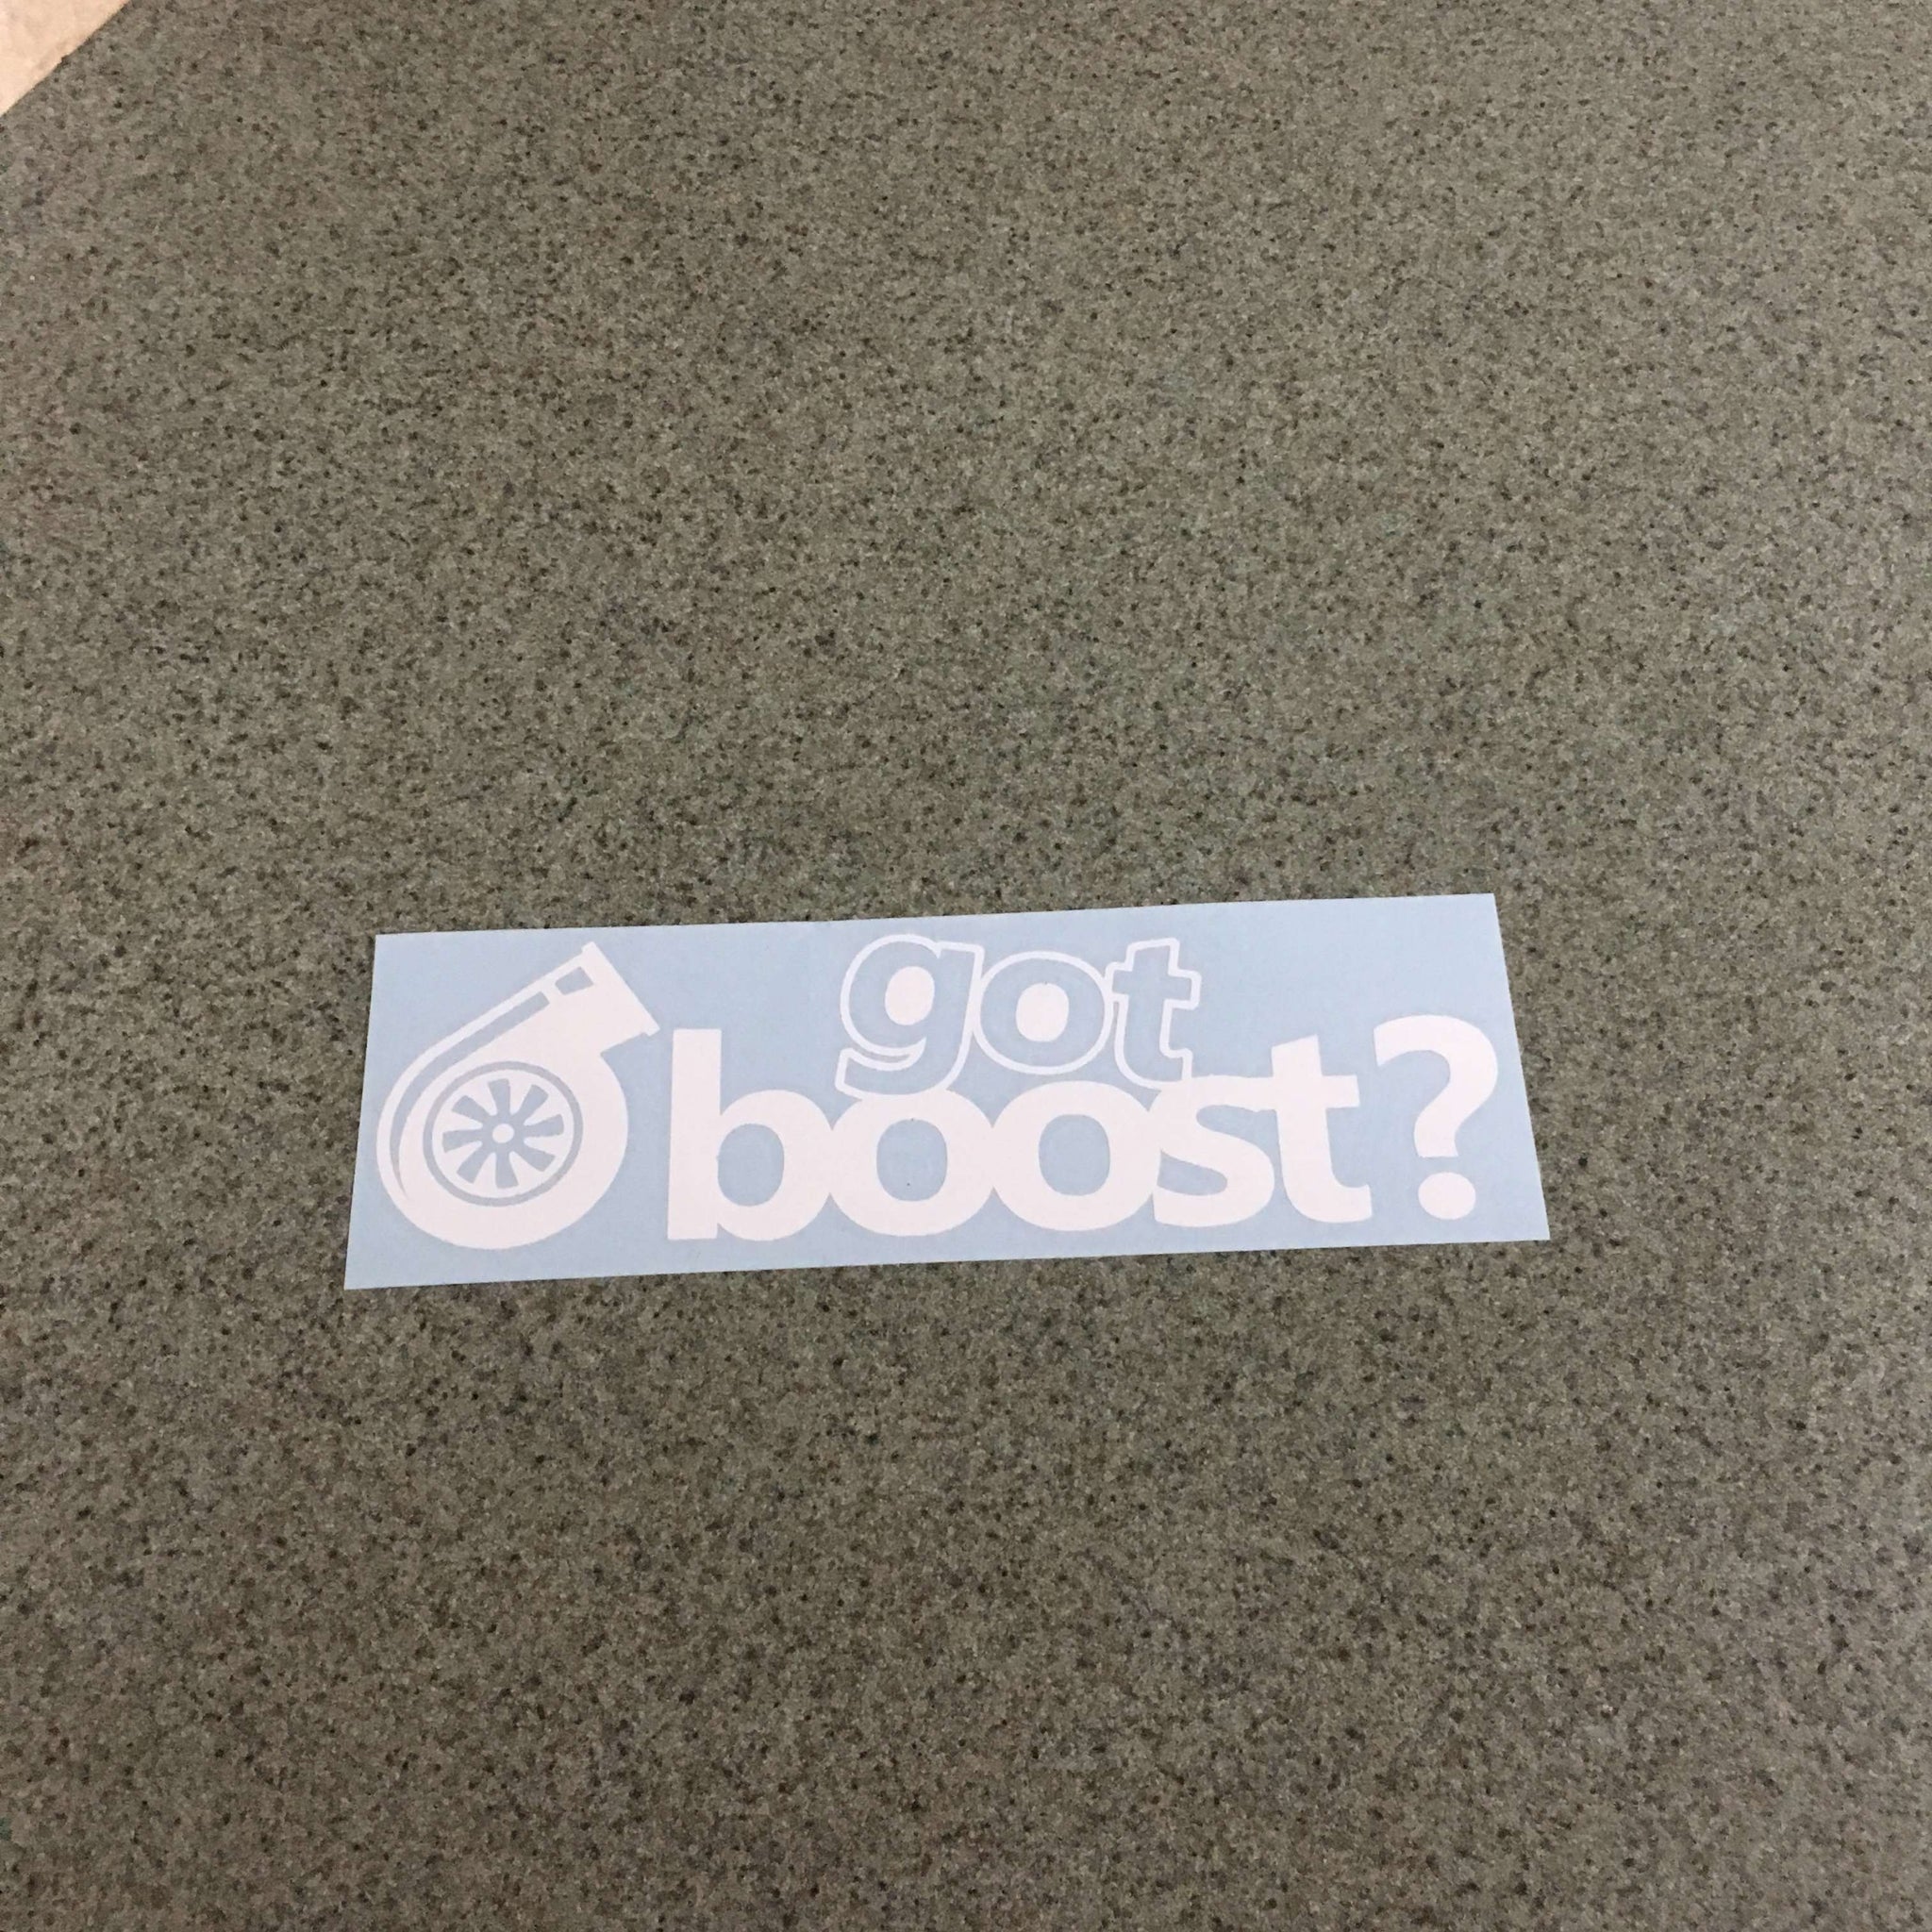 got boost sticker